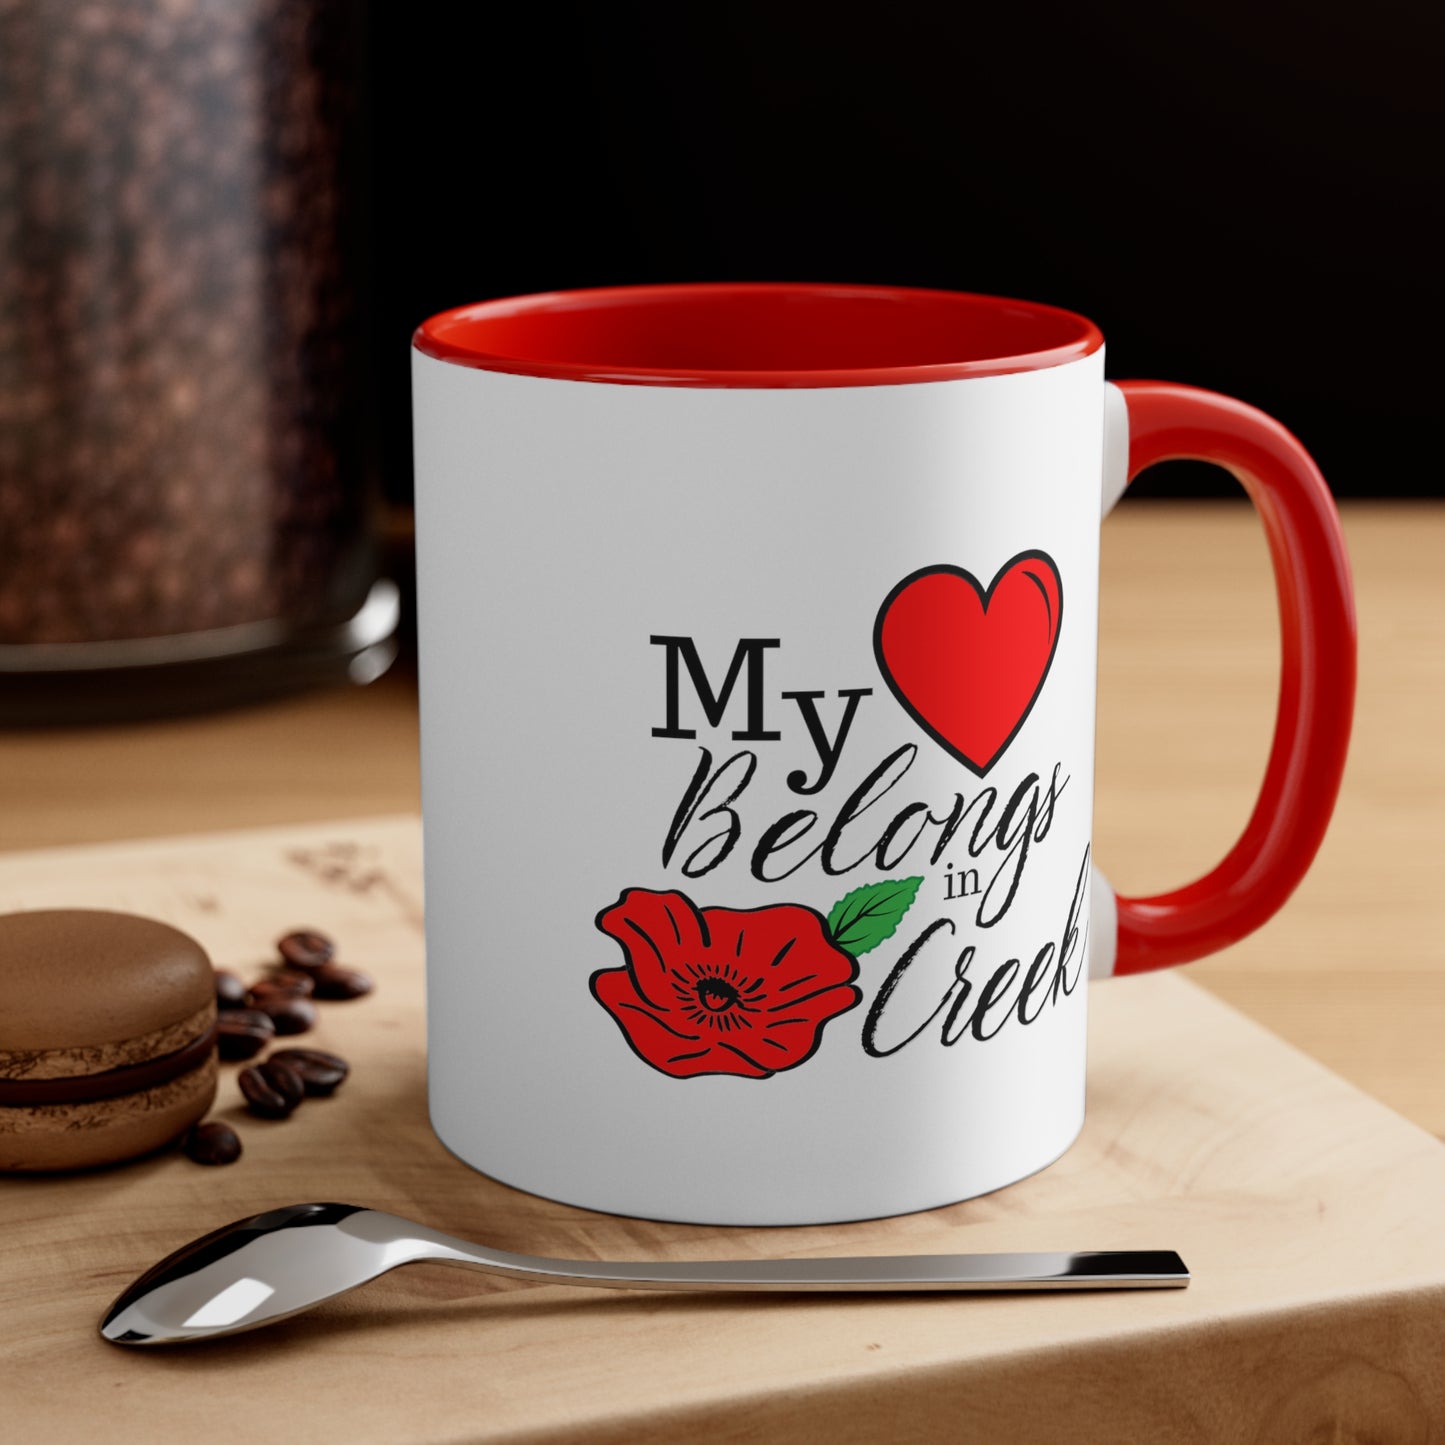 My Heart Belongs in Poppy Creek Coffee Mug, 11oz - FREE U.S. SHIPPING